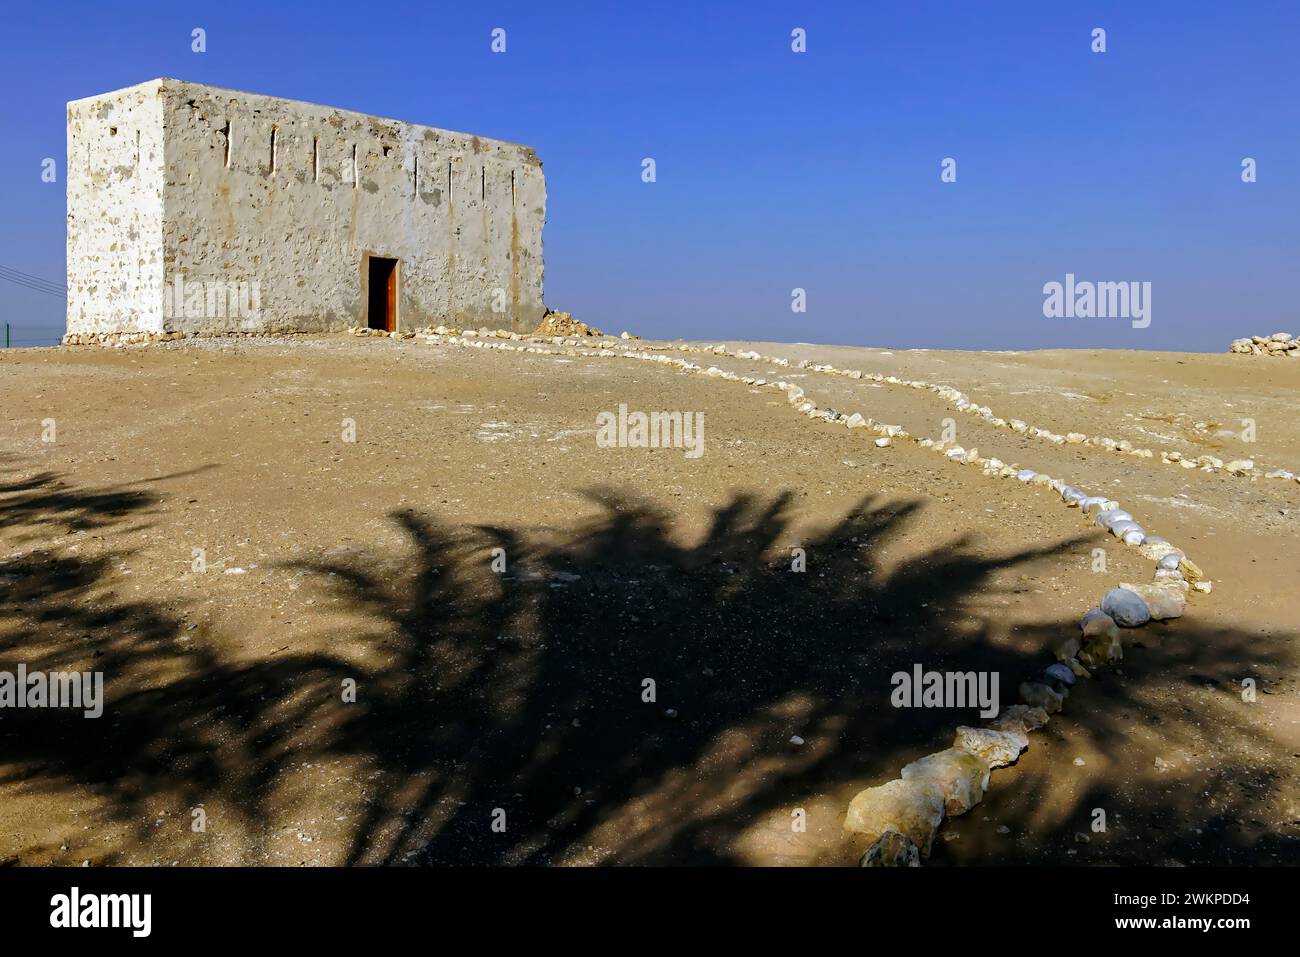 Archeological site of Ubar near Shisr, Rub' al Khali, the Empty Quarter, Oman. Stock Photo